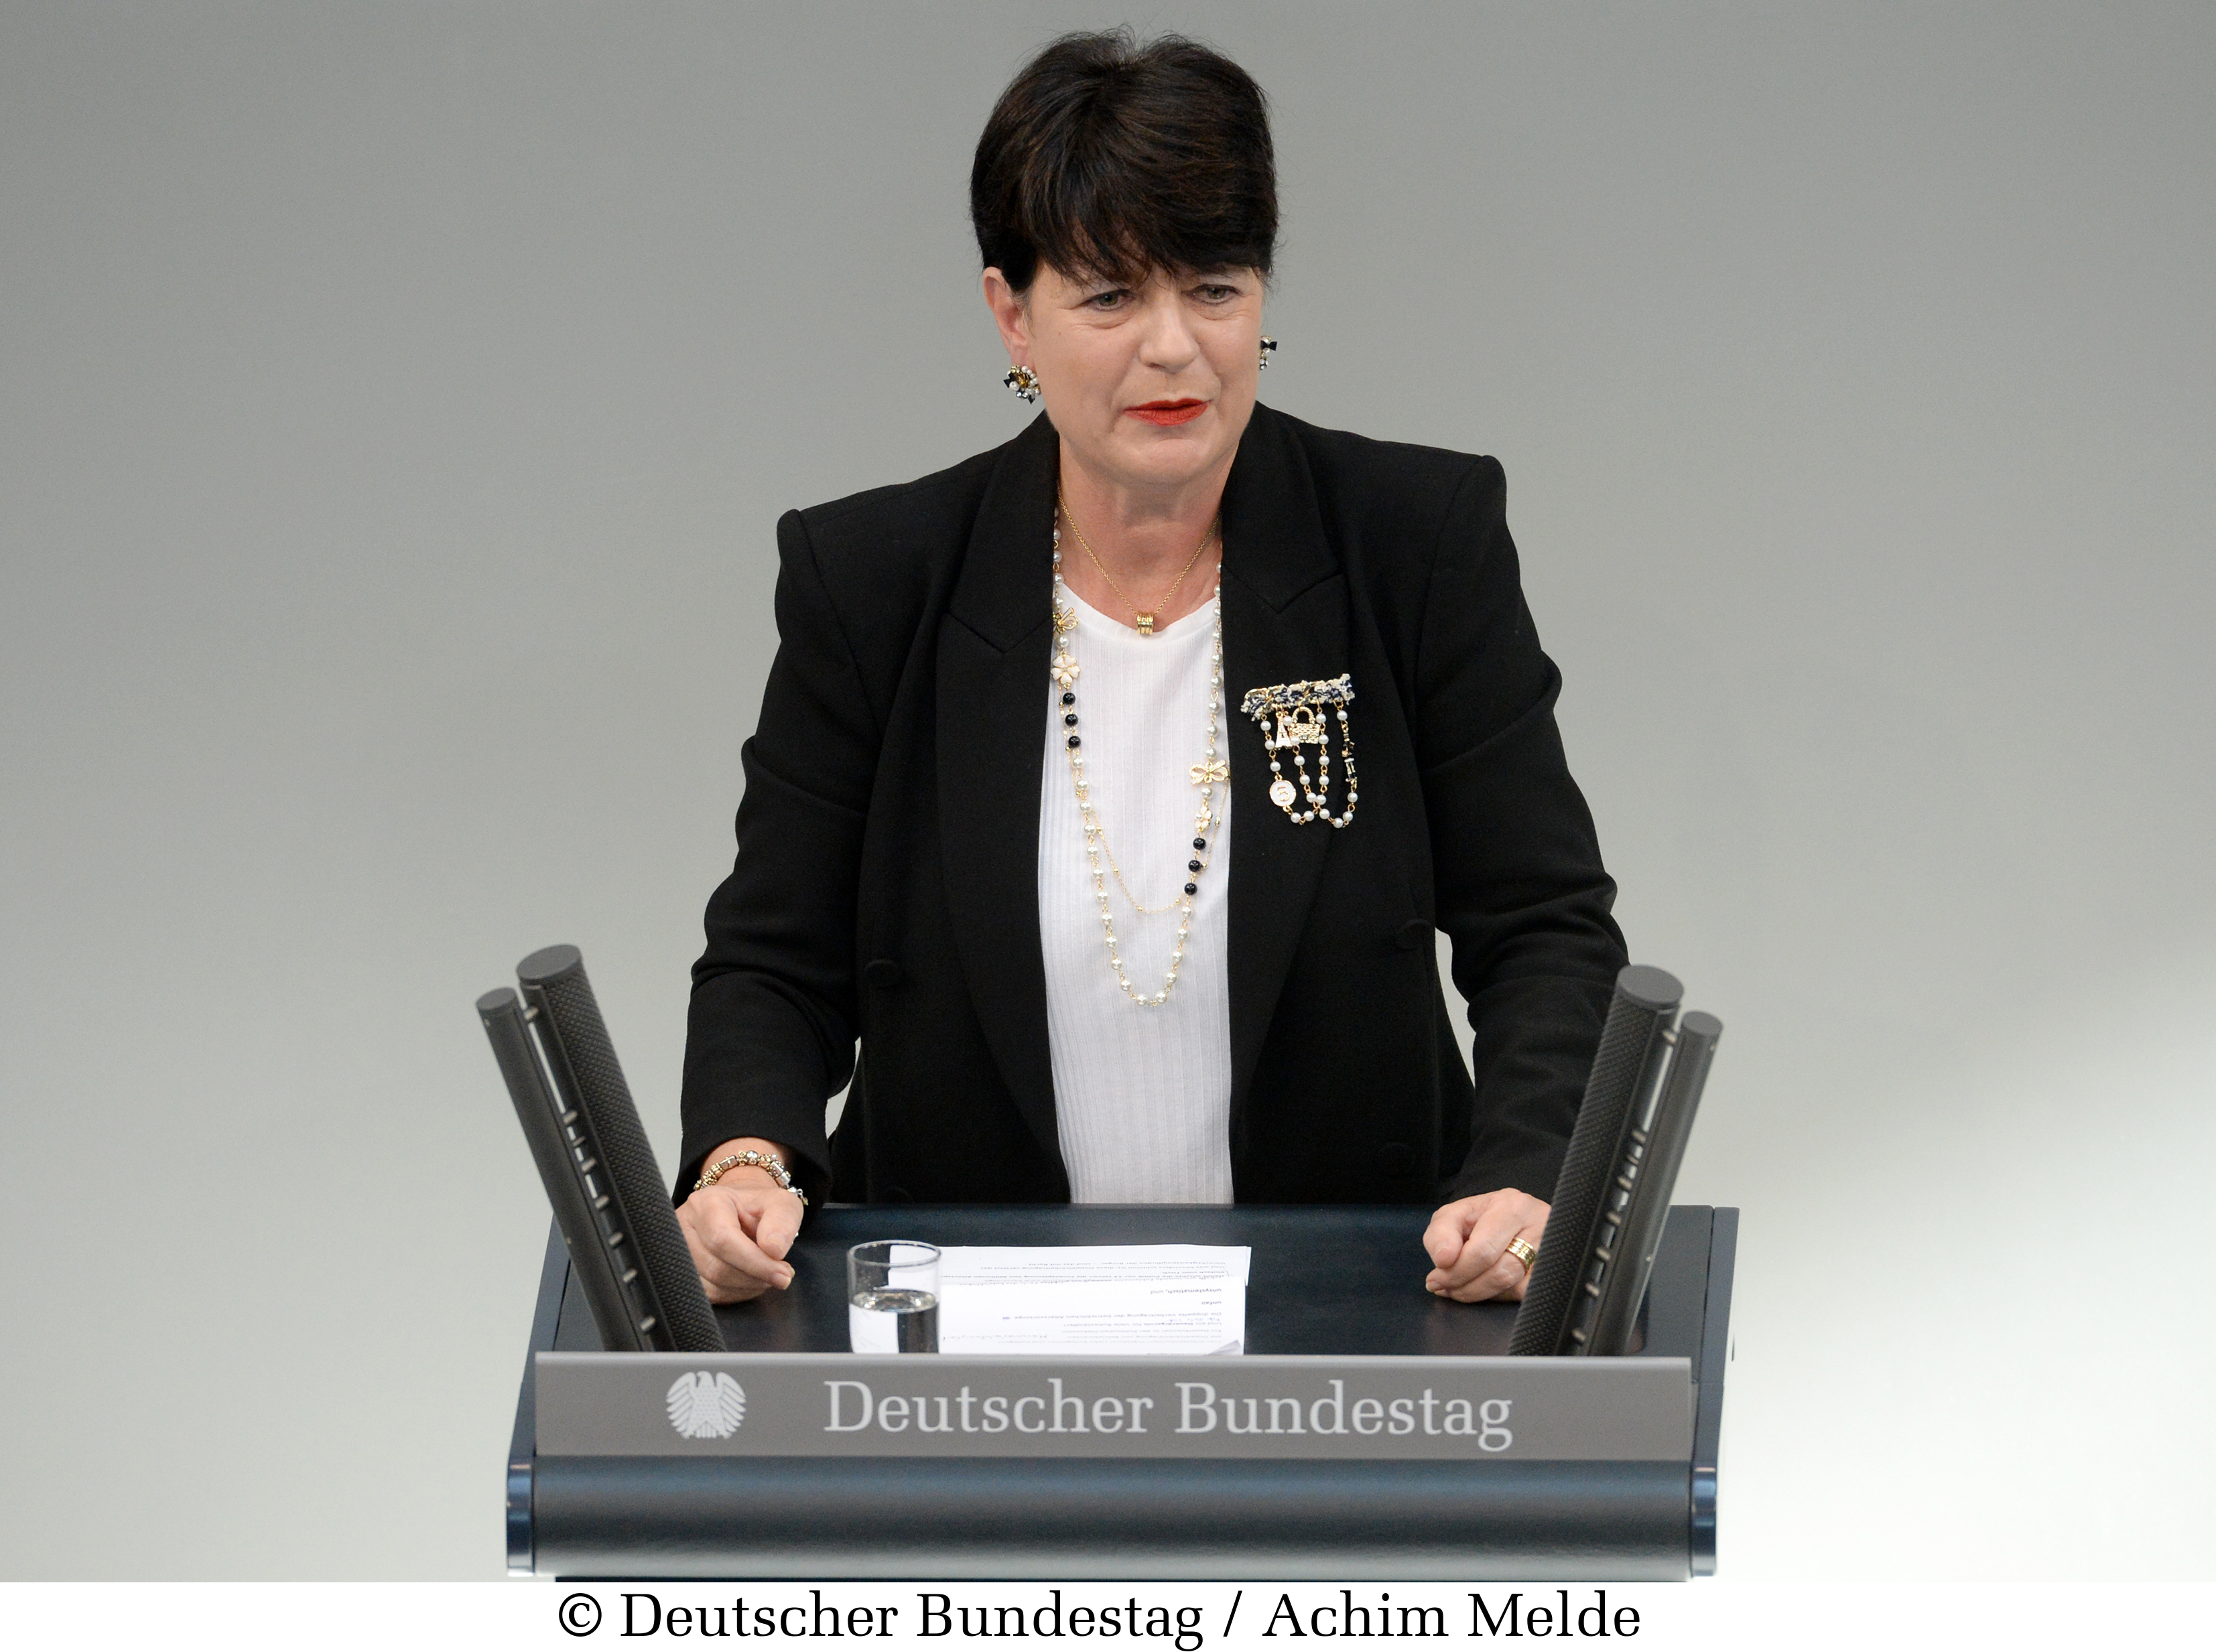 Christine Aschenberg-Dugnus